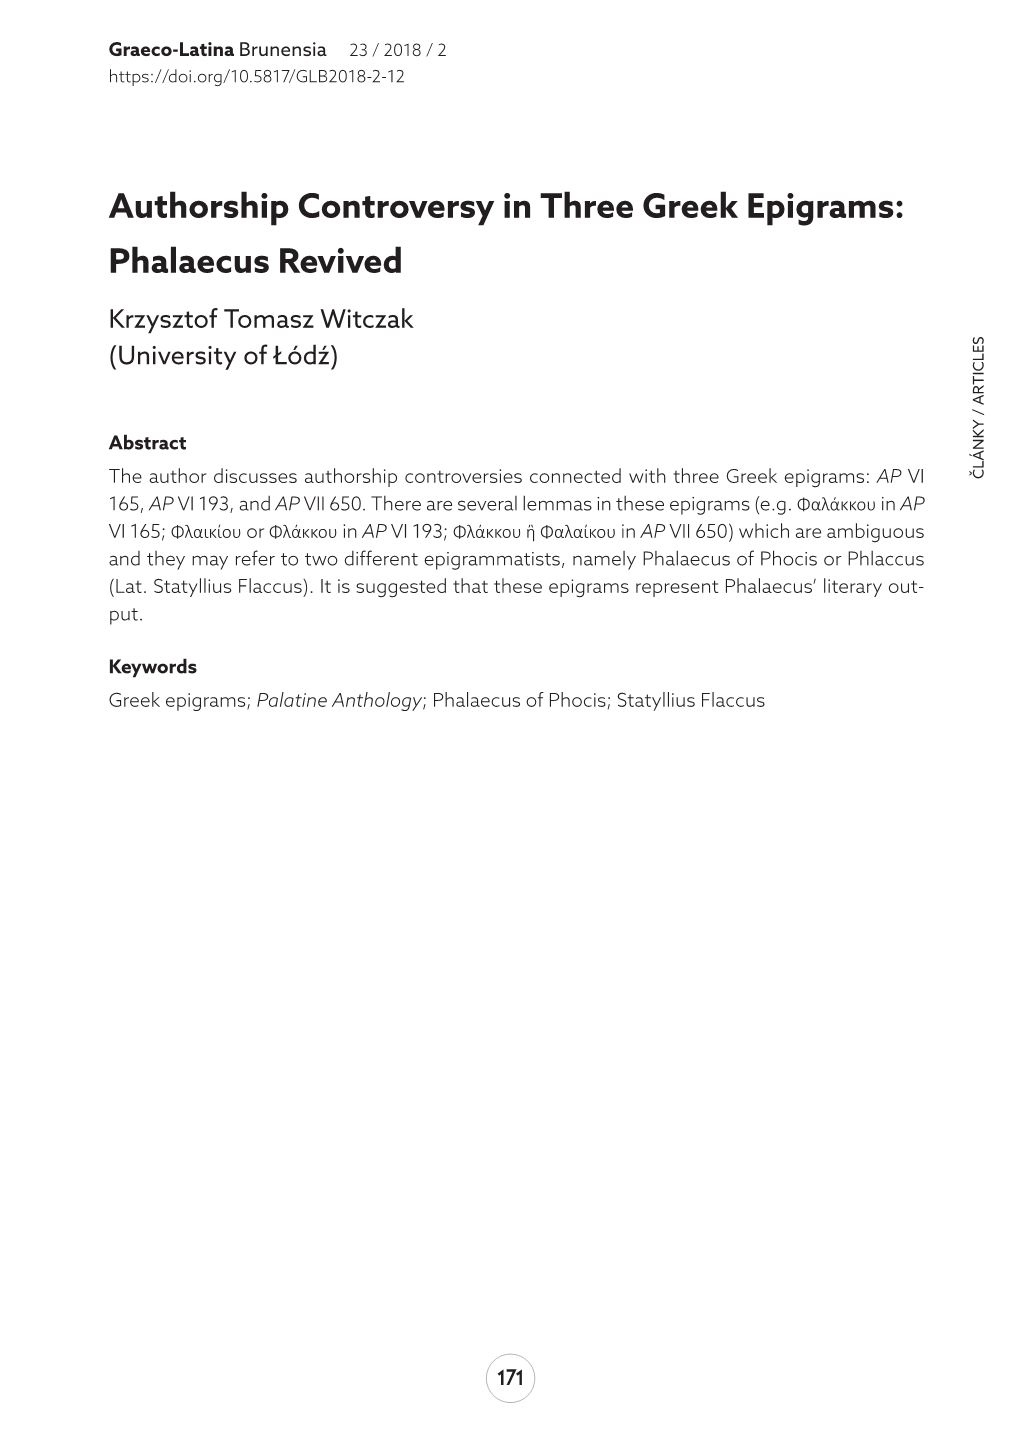 Authorship Controversy in Three Greek Epigrams: Phalaecus Revived